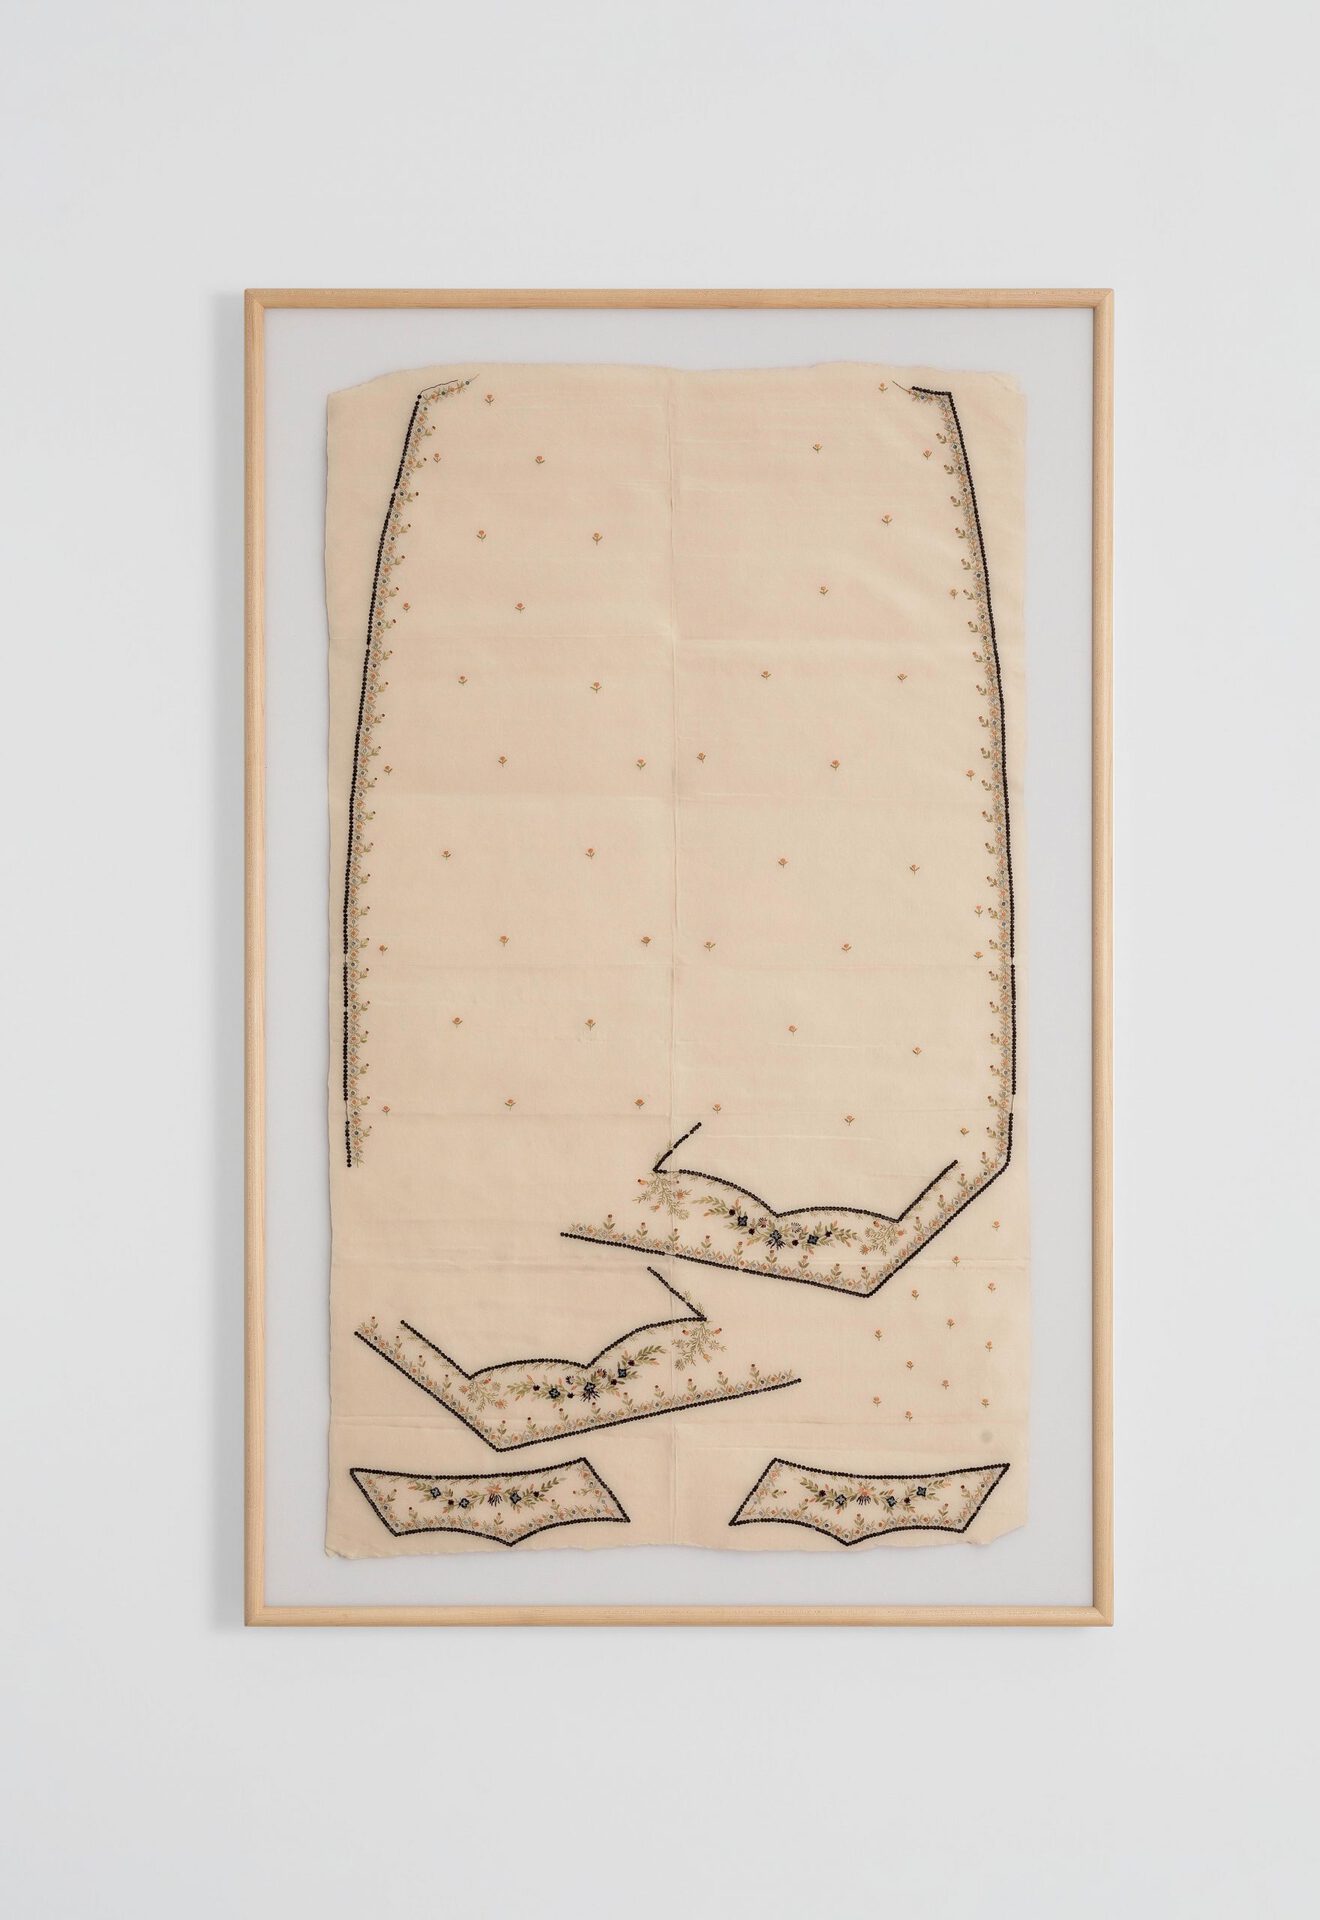 Adi Fluman, Untitled, 2021. Digital sculpture, inkjet printed on paper in artist’s frame (maple wood), 132.5×86×8 cm. Photo: Tal Nisim. Courtesy of the artist and Dvir Gallery, Tel Aviv/Brussels.